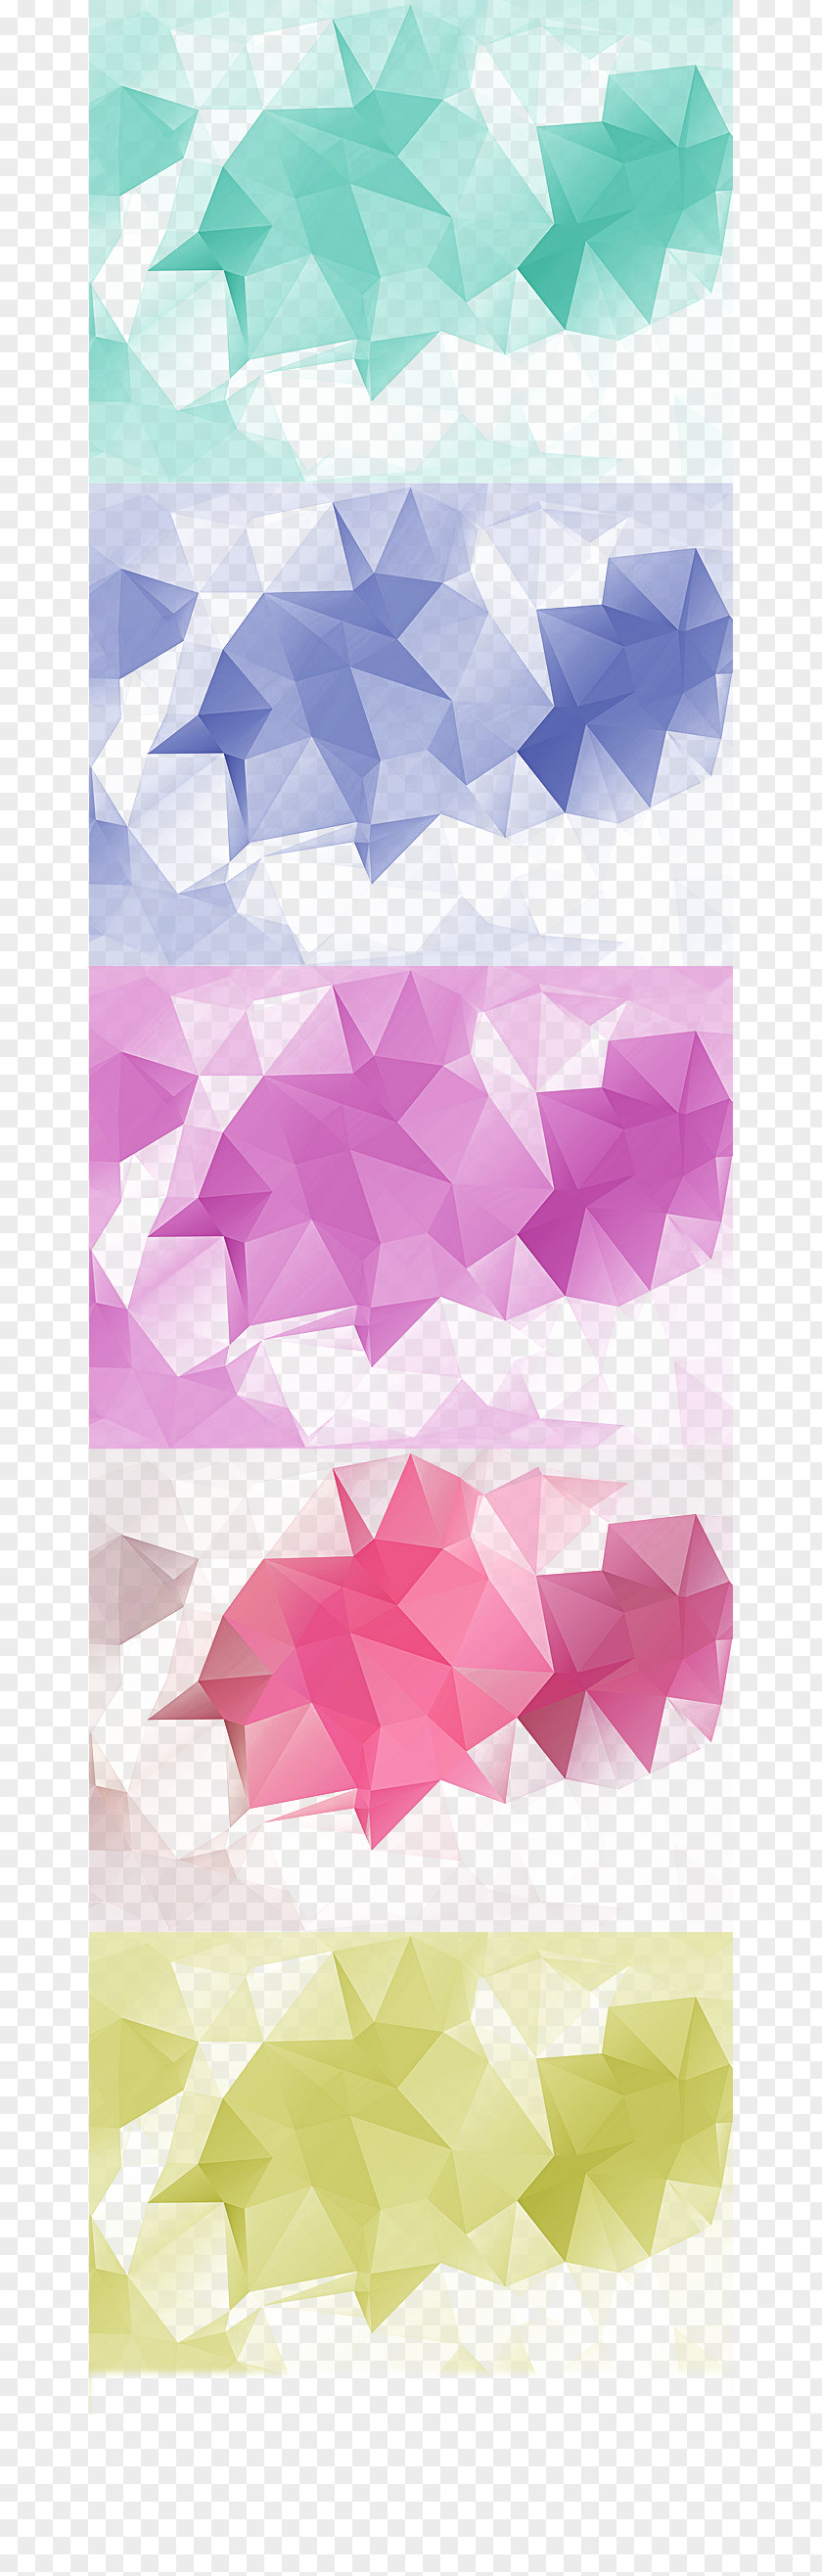 Diamond Element Collection Web Banner Monochrome PNG